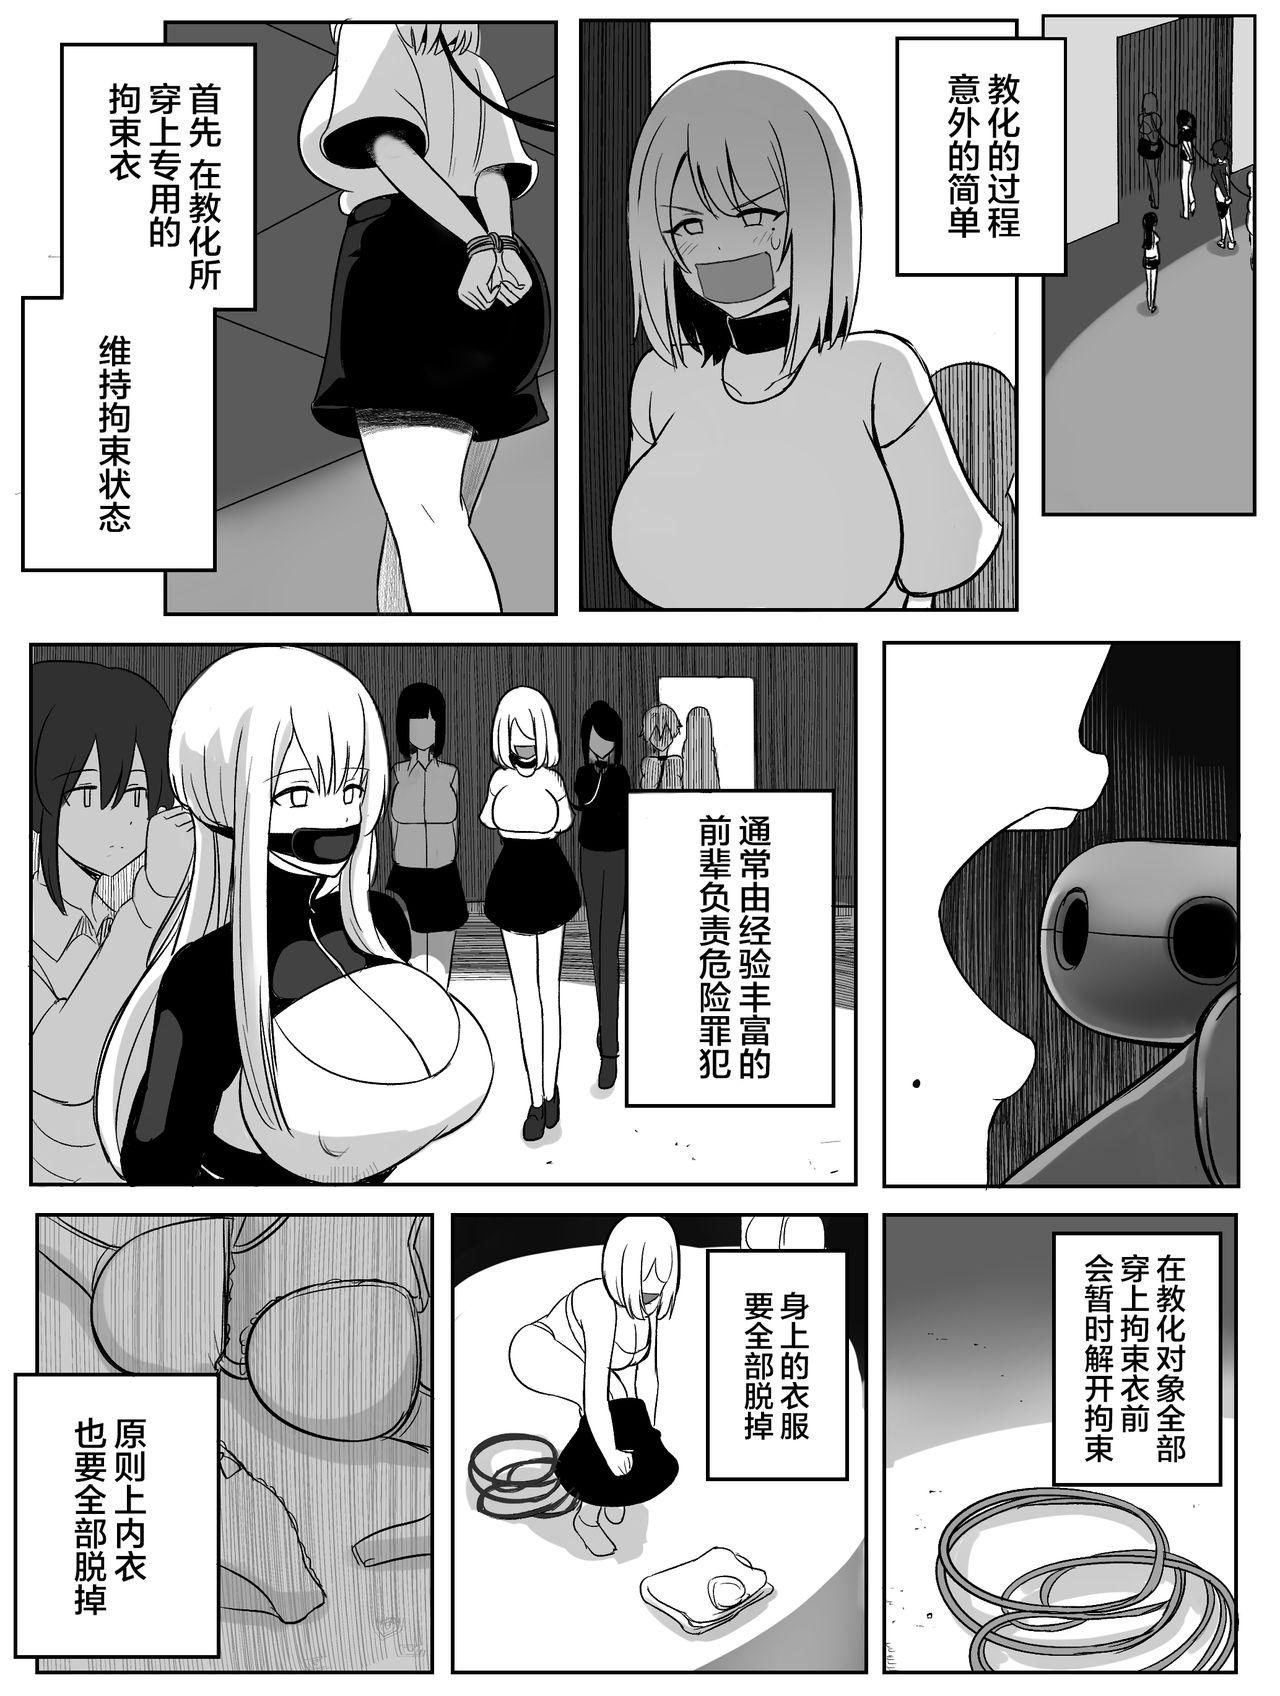 Best Blowjobs Ever Shokuzai - Original Unshaved - Page 9